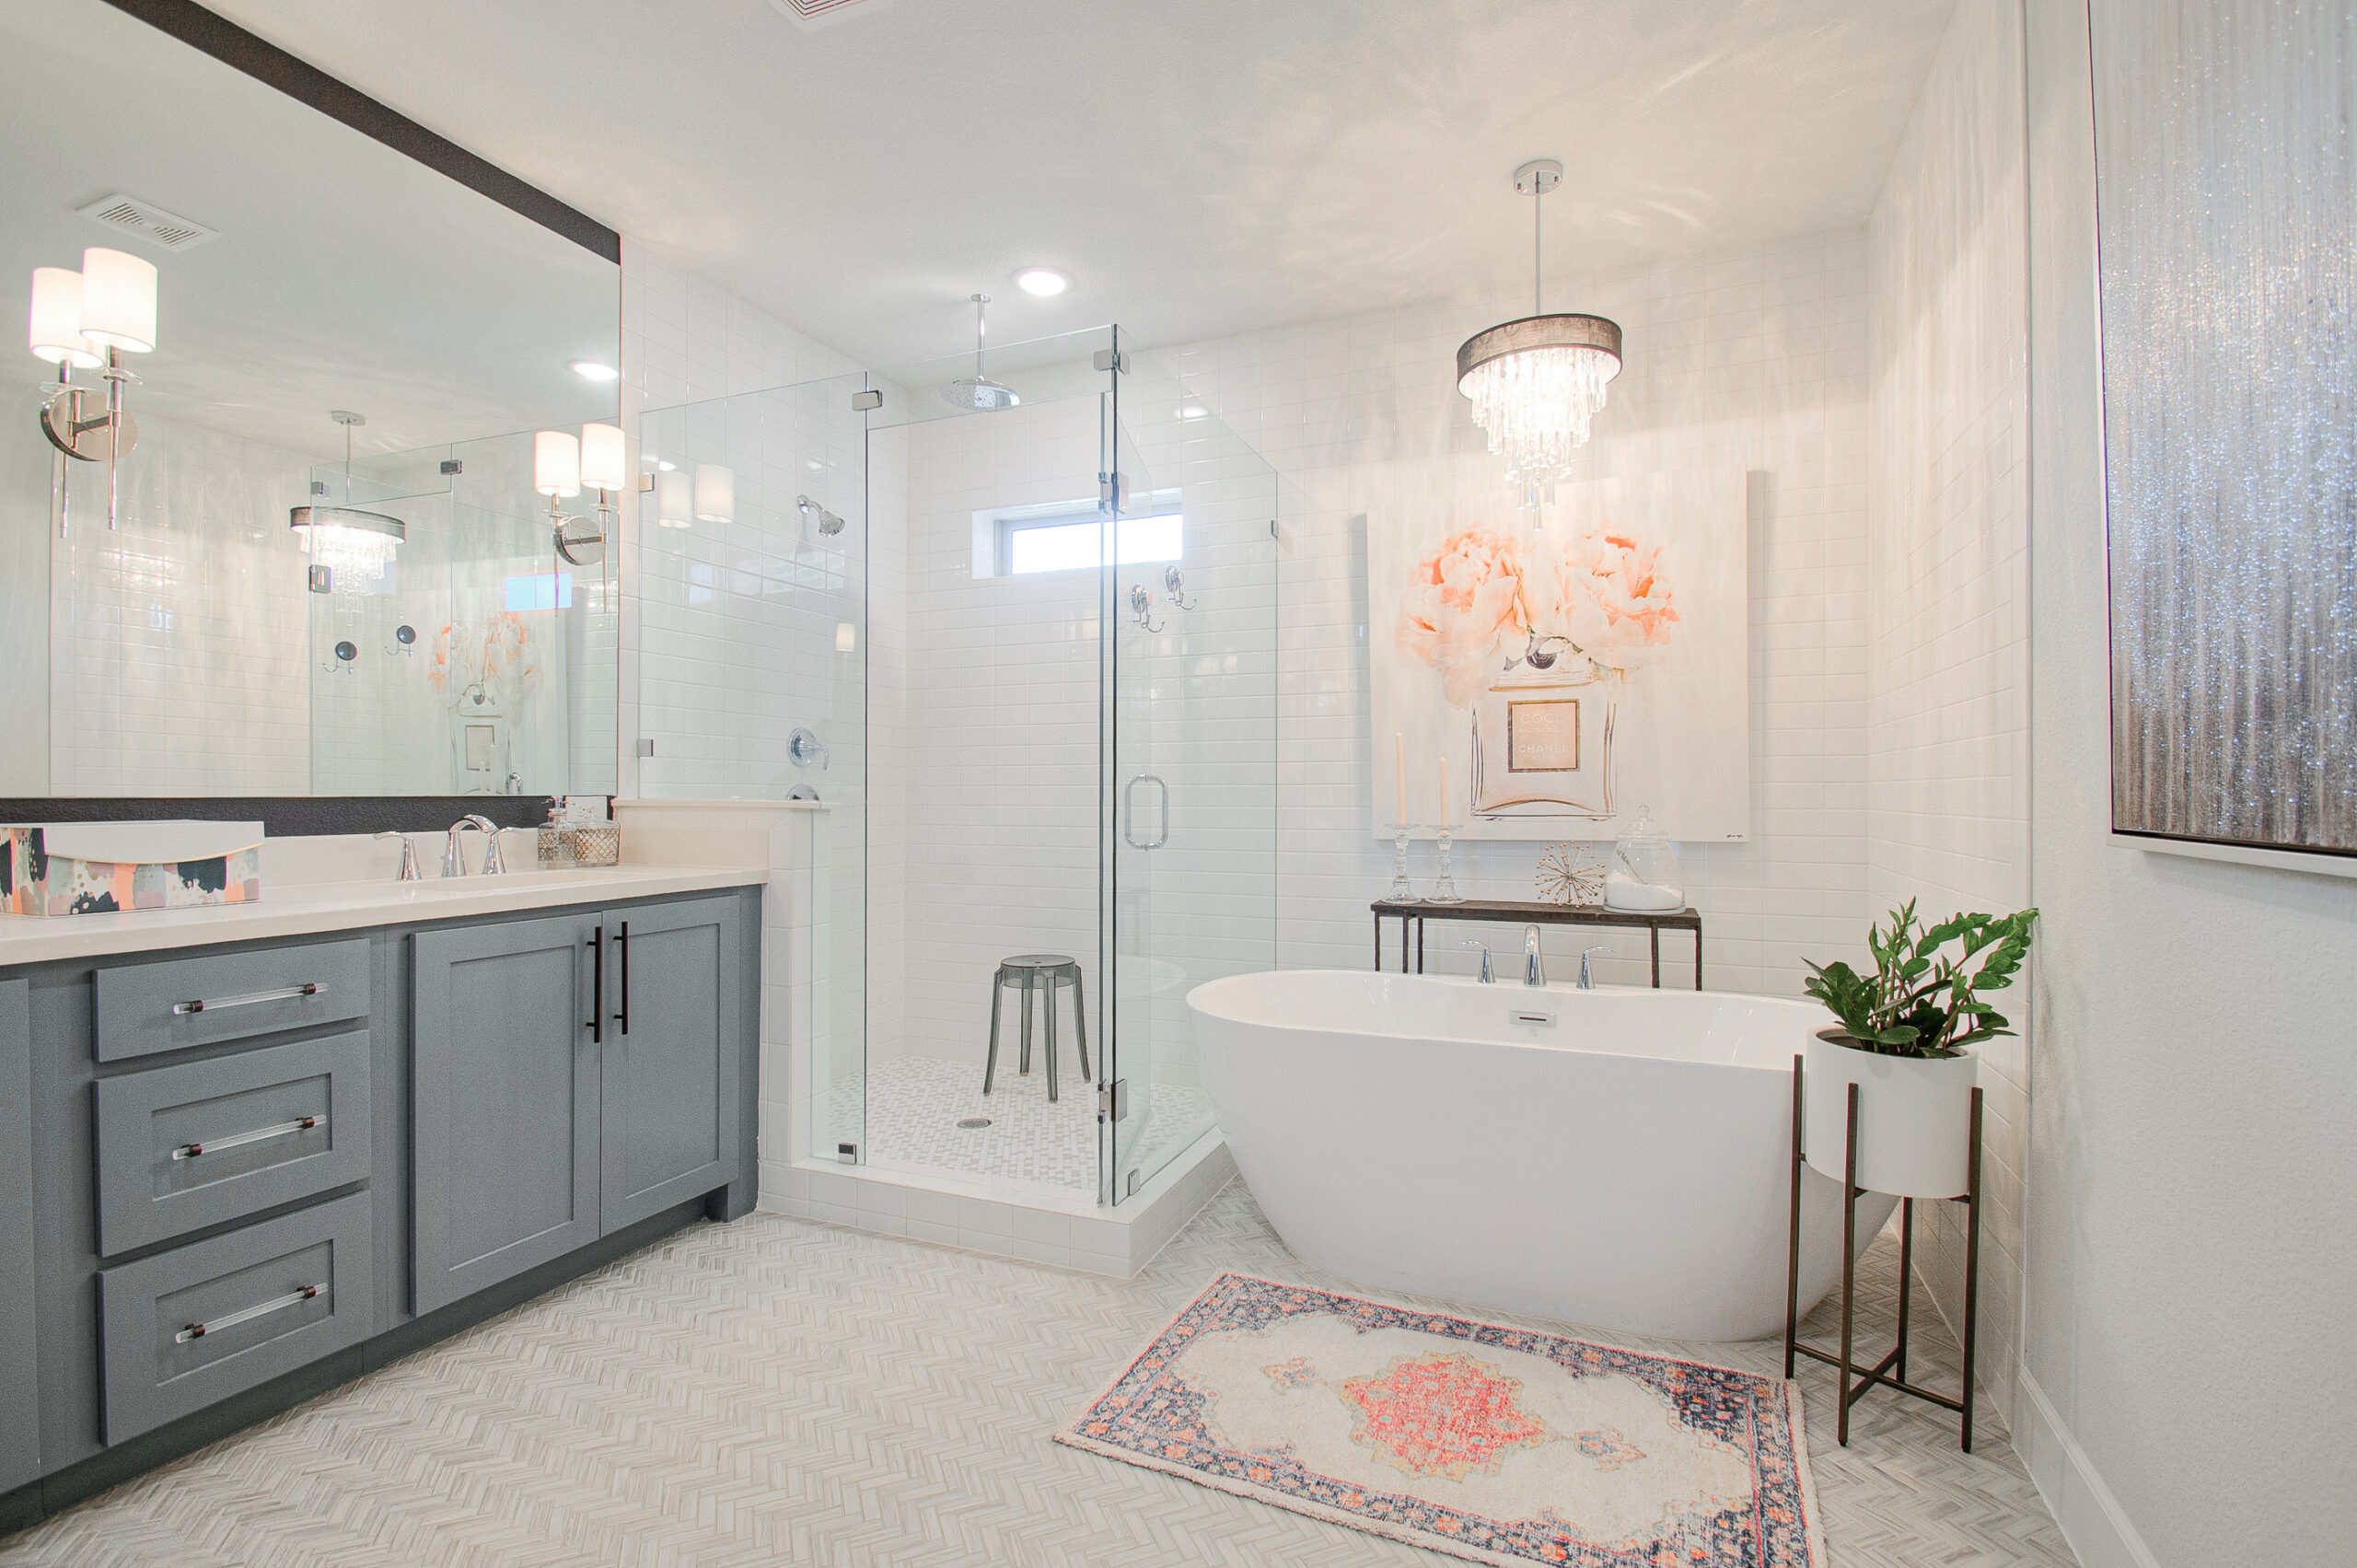 Design-by-Keti-Dallas-Texas-Renovations-Interior-Design-Luxury-Master-Bathroom-Gray-Cabinetry-Large-Soaking-Tub